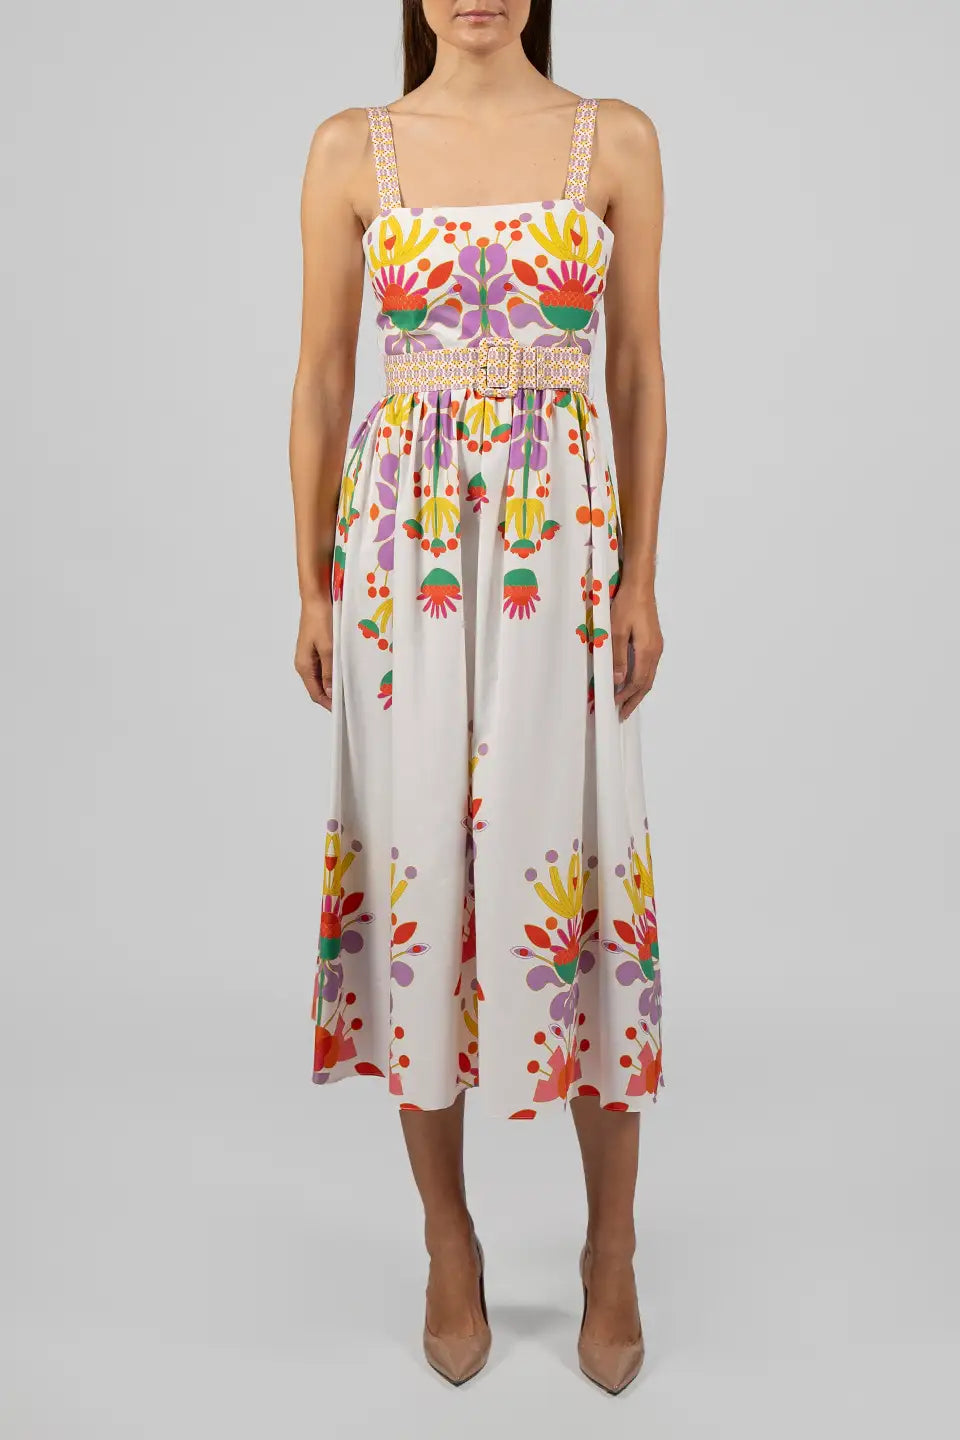 Shop online trendy White Midi dresses from Borgo de Nor Fashion designer. Product gallery 1